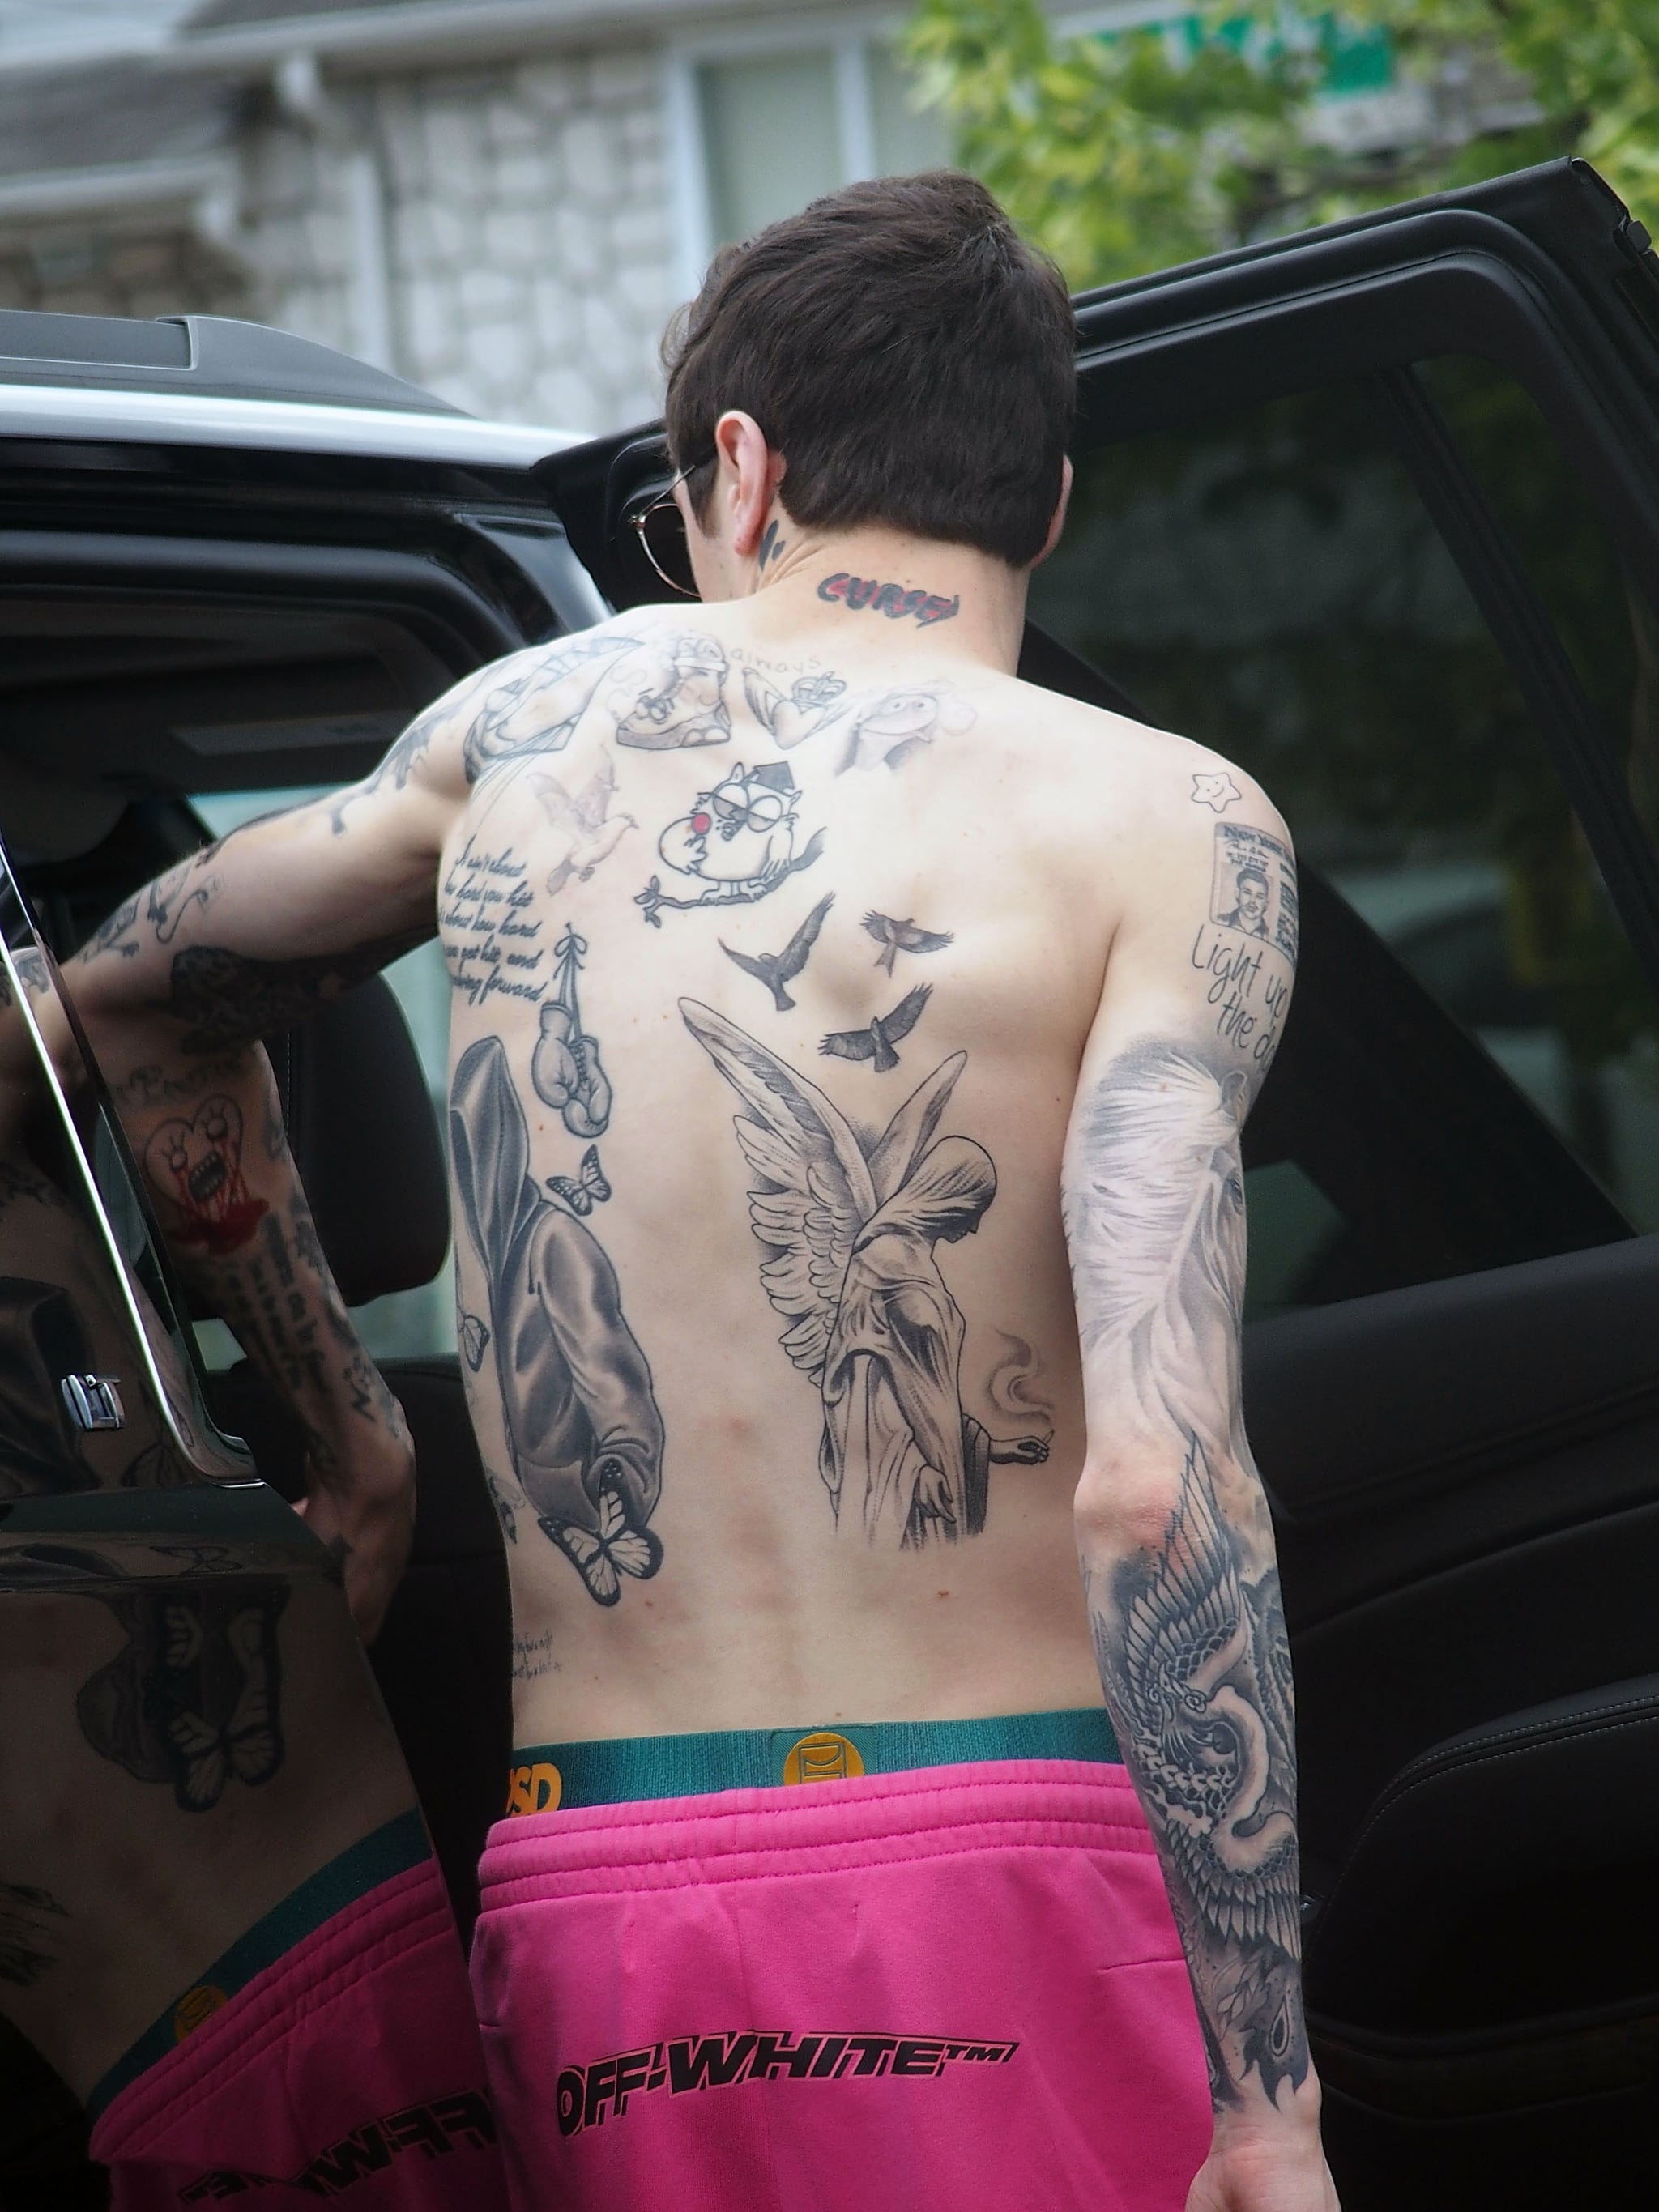 Cursed Pete Davidson covers up Ariana Grande tattoo